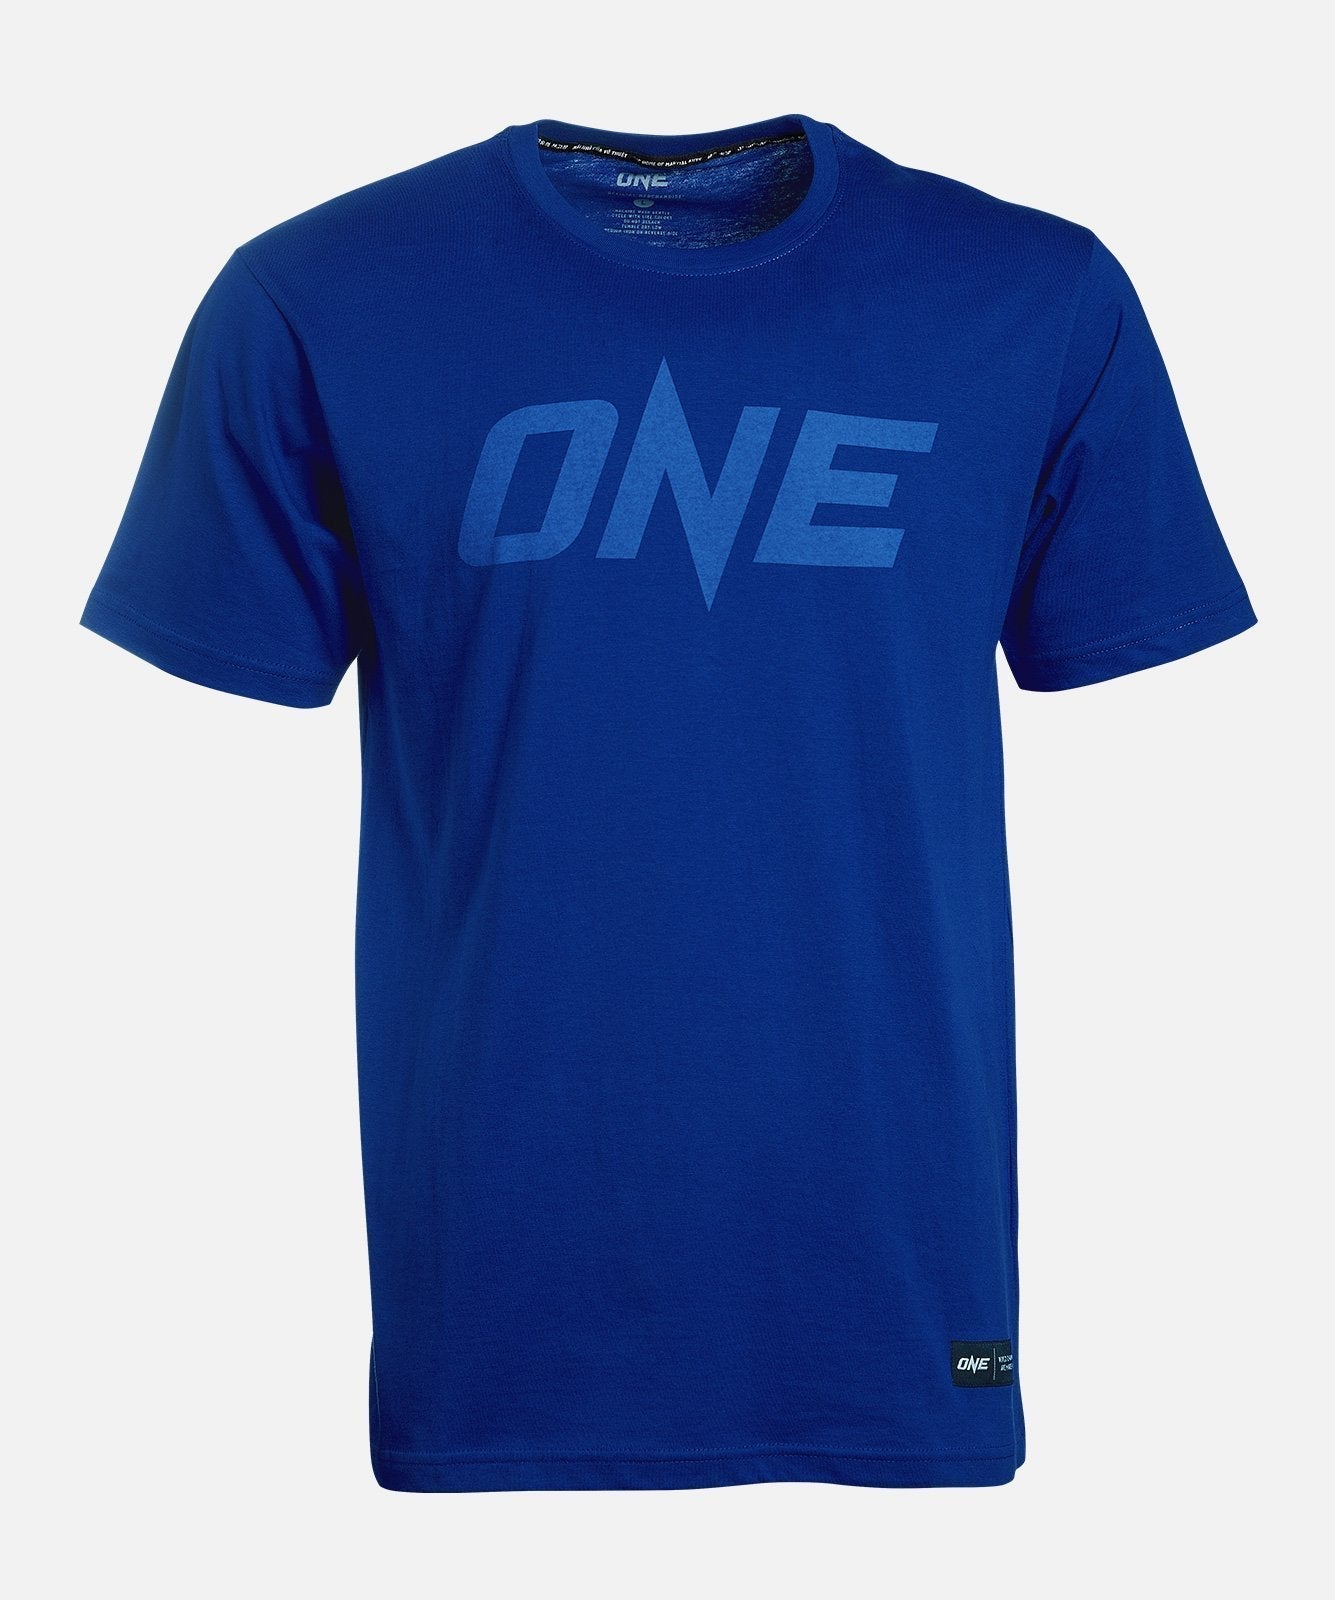 ONE Mens T-Shirt Blue MonotONE Logo MMA - Budo Online